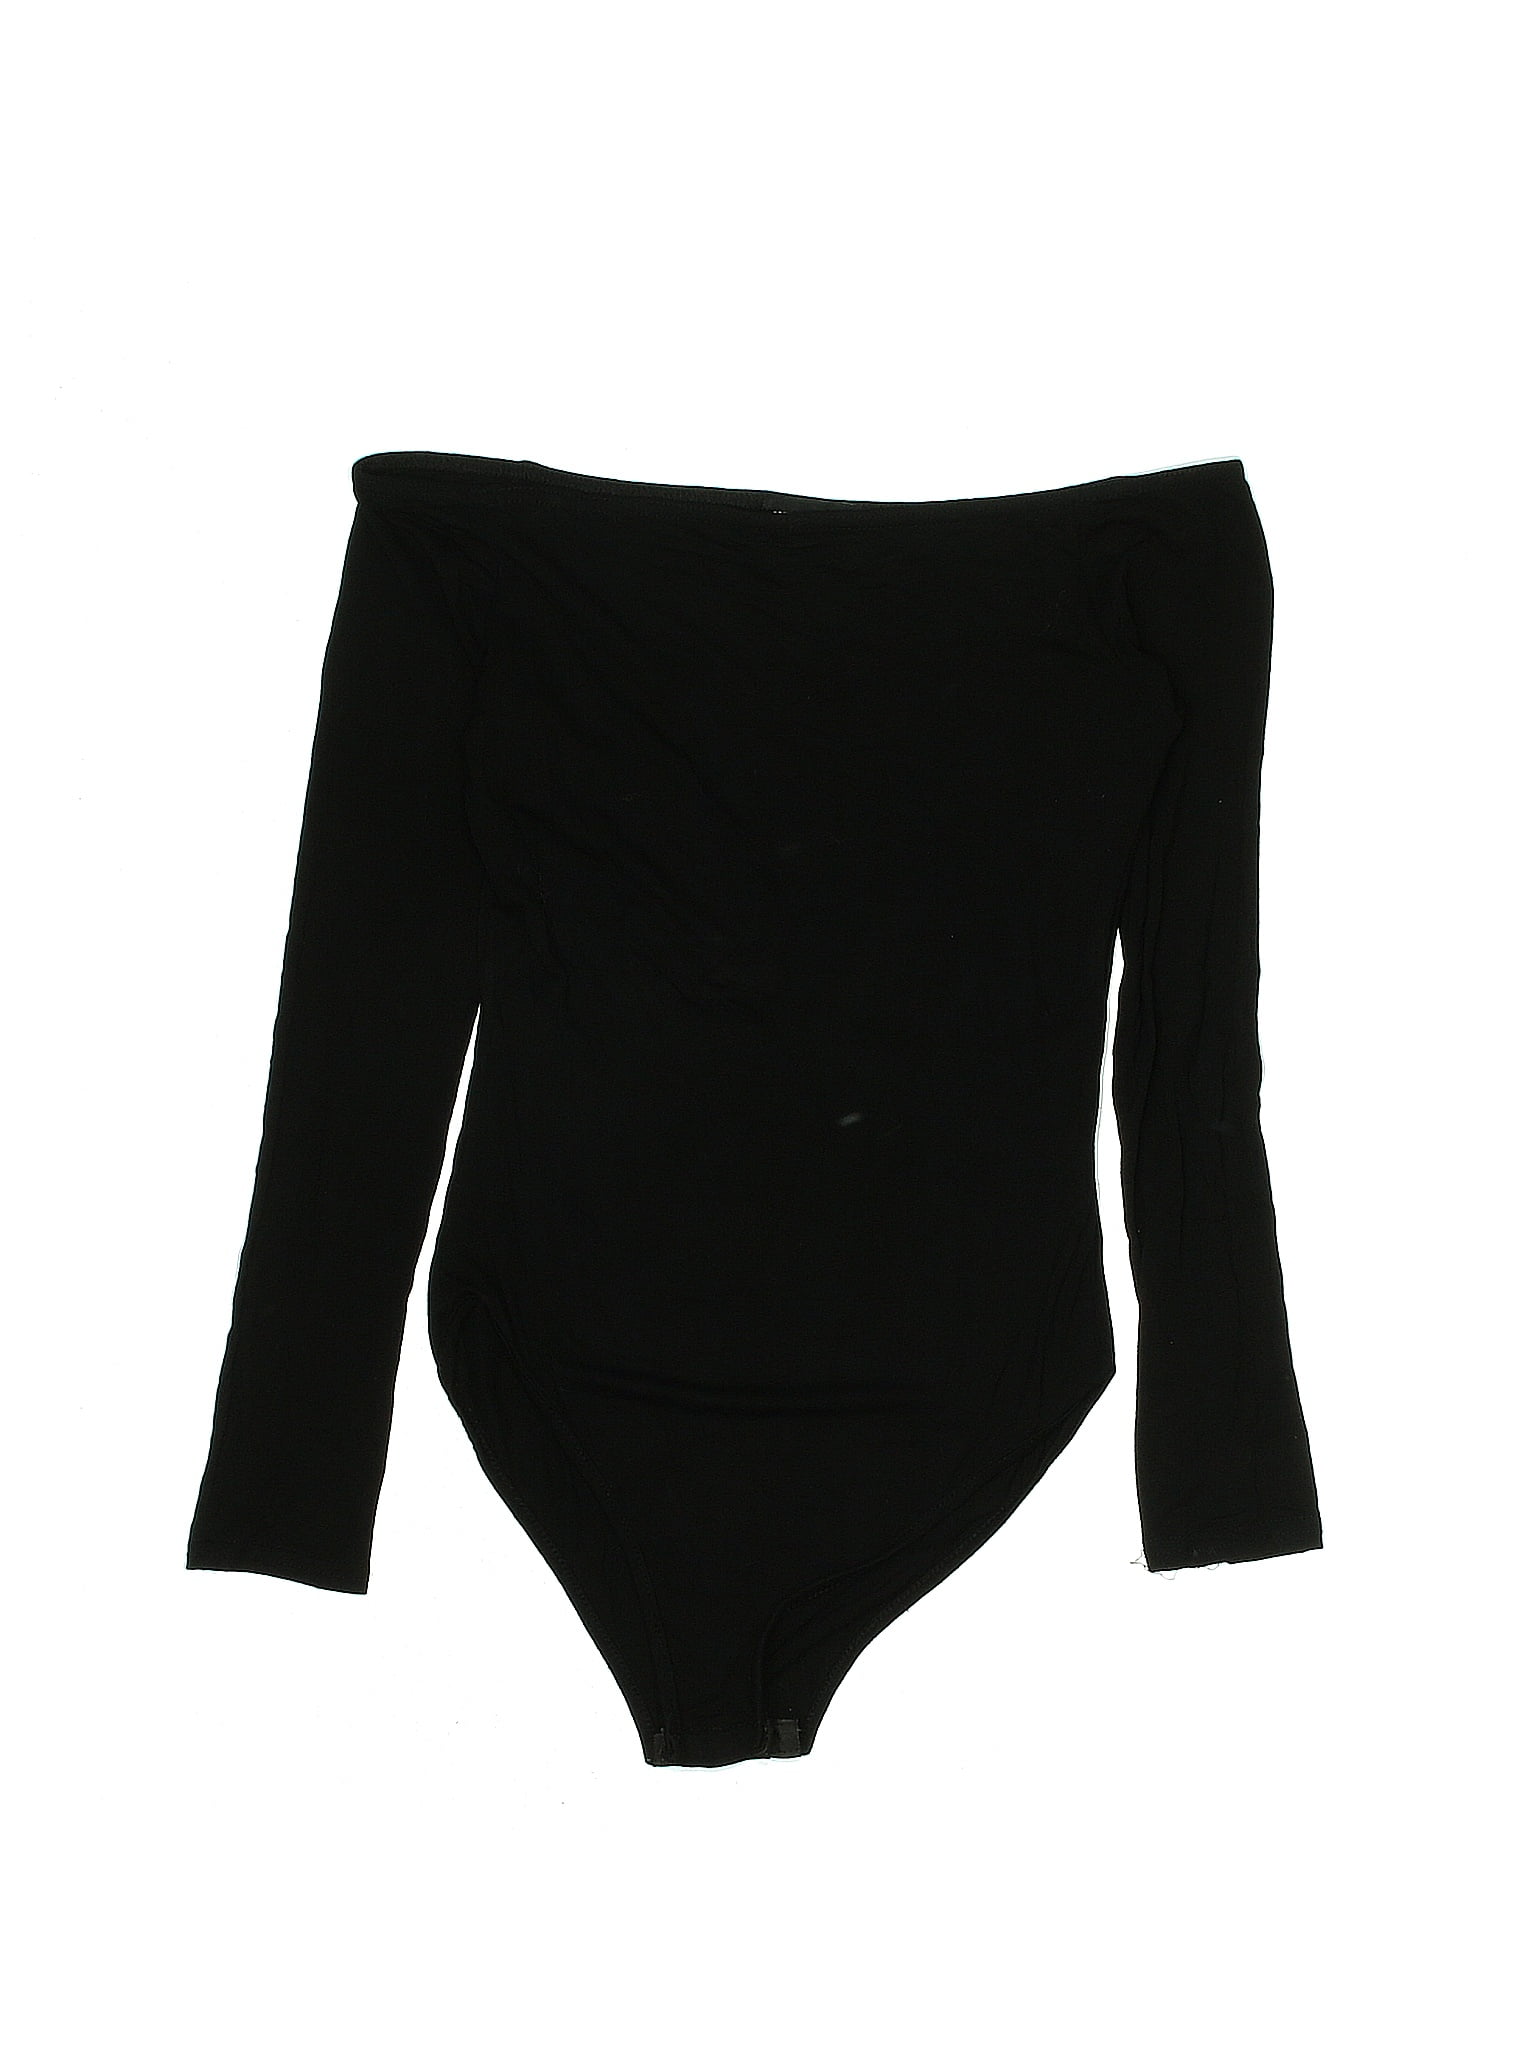 PrettyLittleThing Black Bodysuit Size 10 - 75% off | thredUP